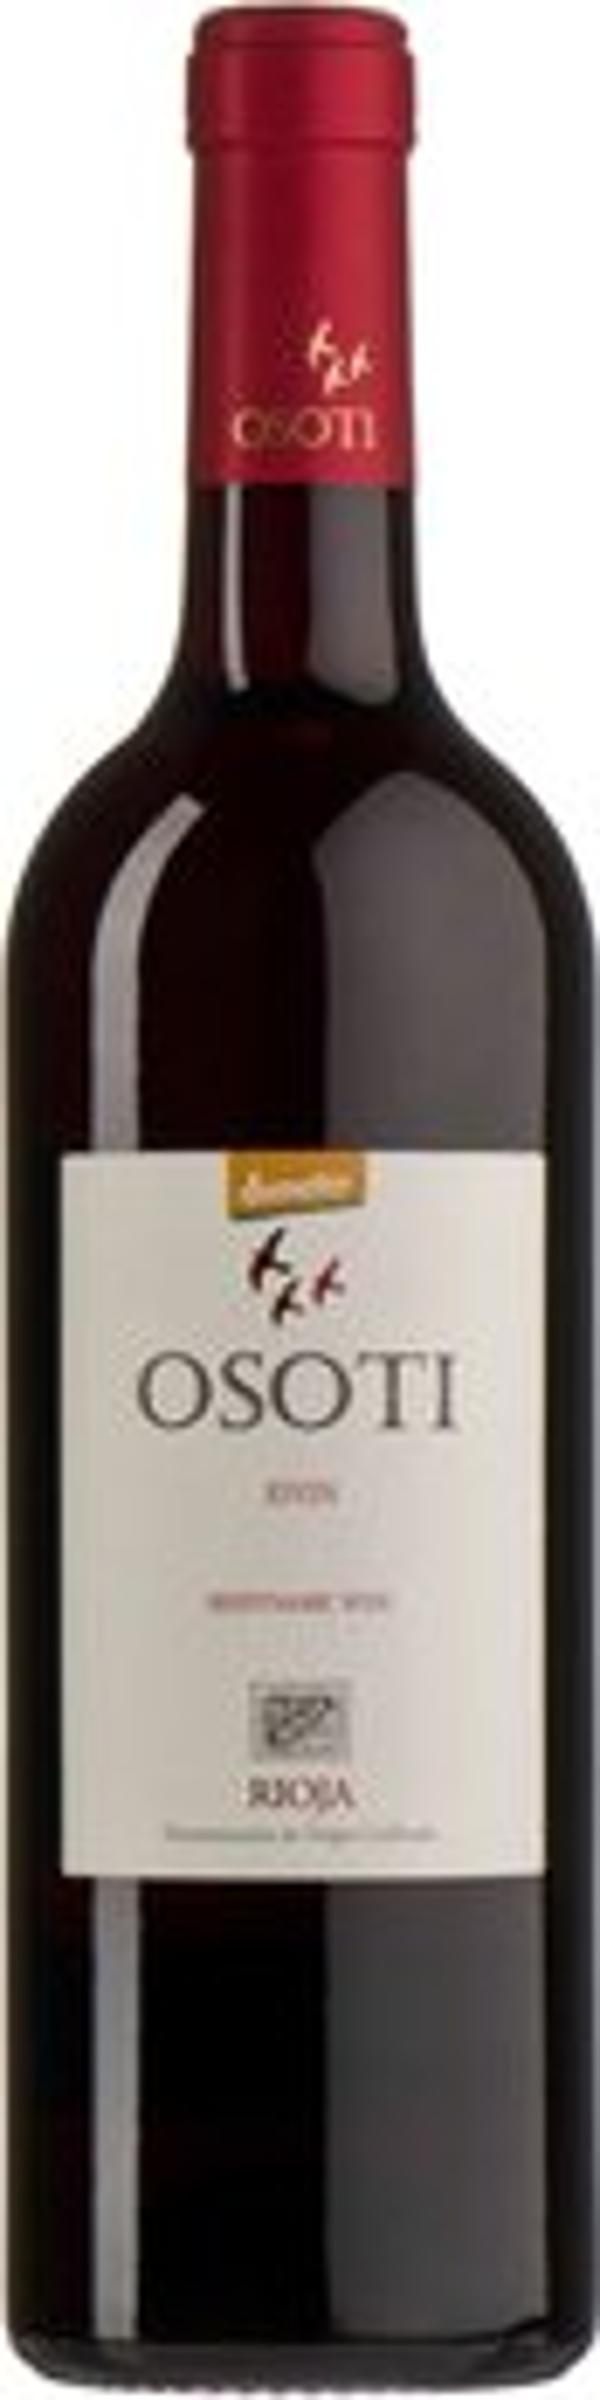 Produktfoto zu Rioja Osoti Tinto, Rotwein trocken 0,75l